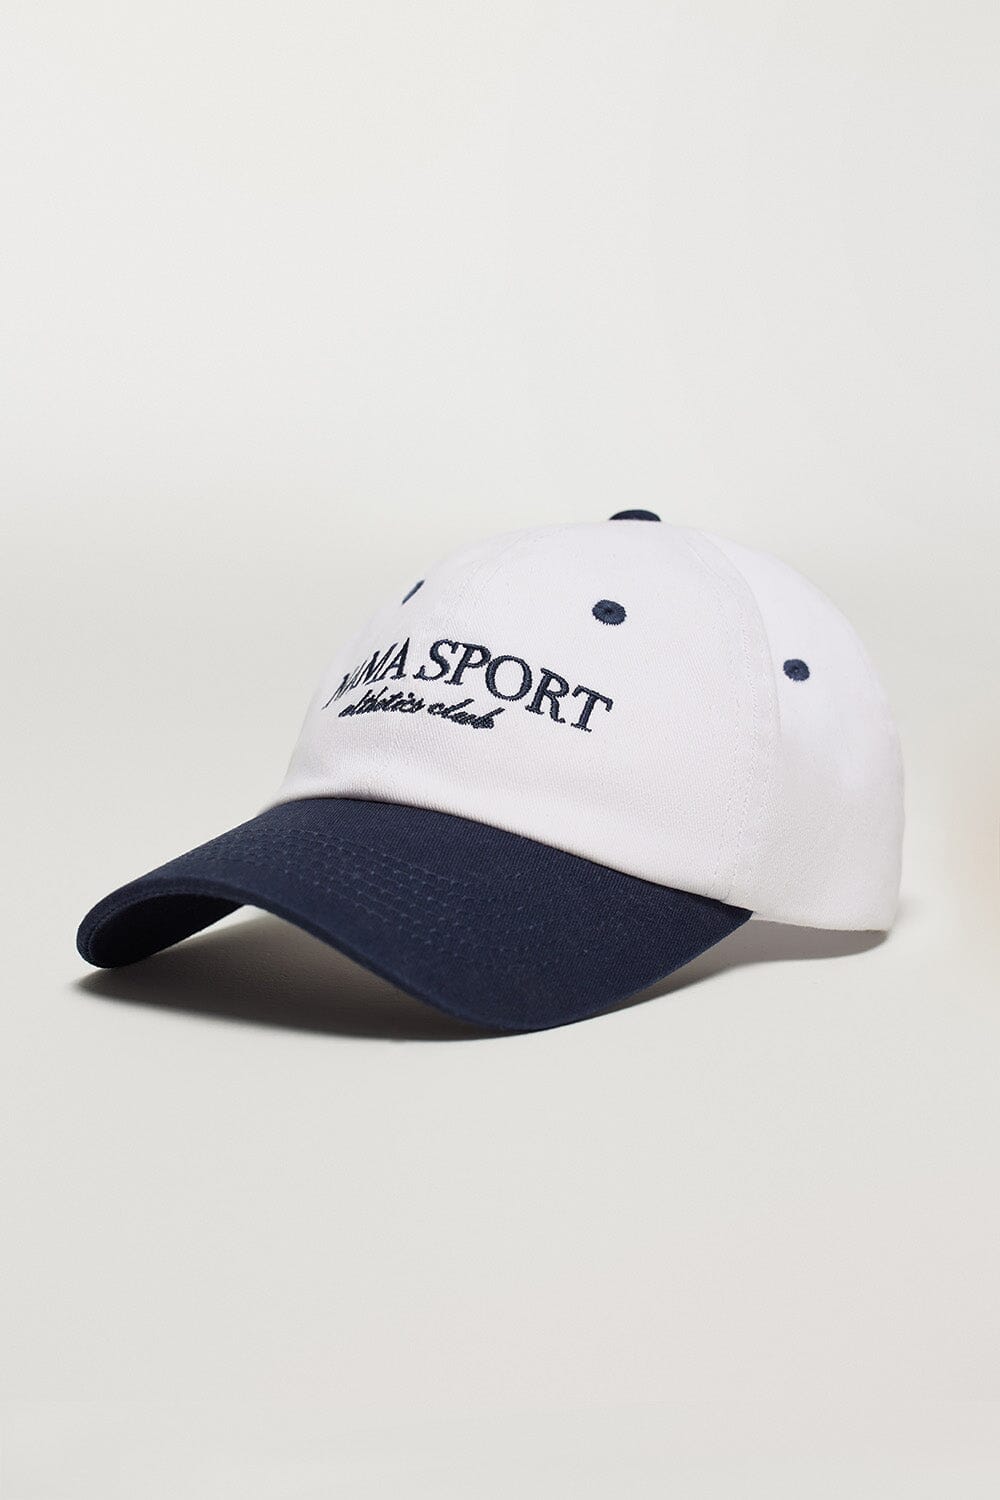 Nama Sport Hat